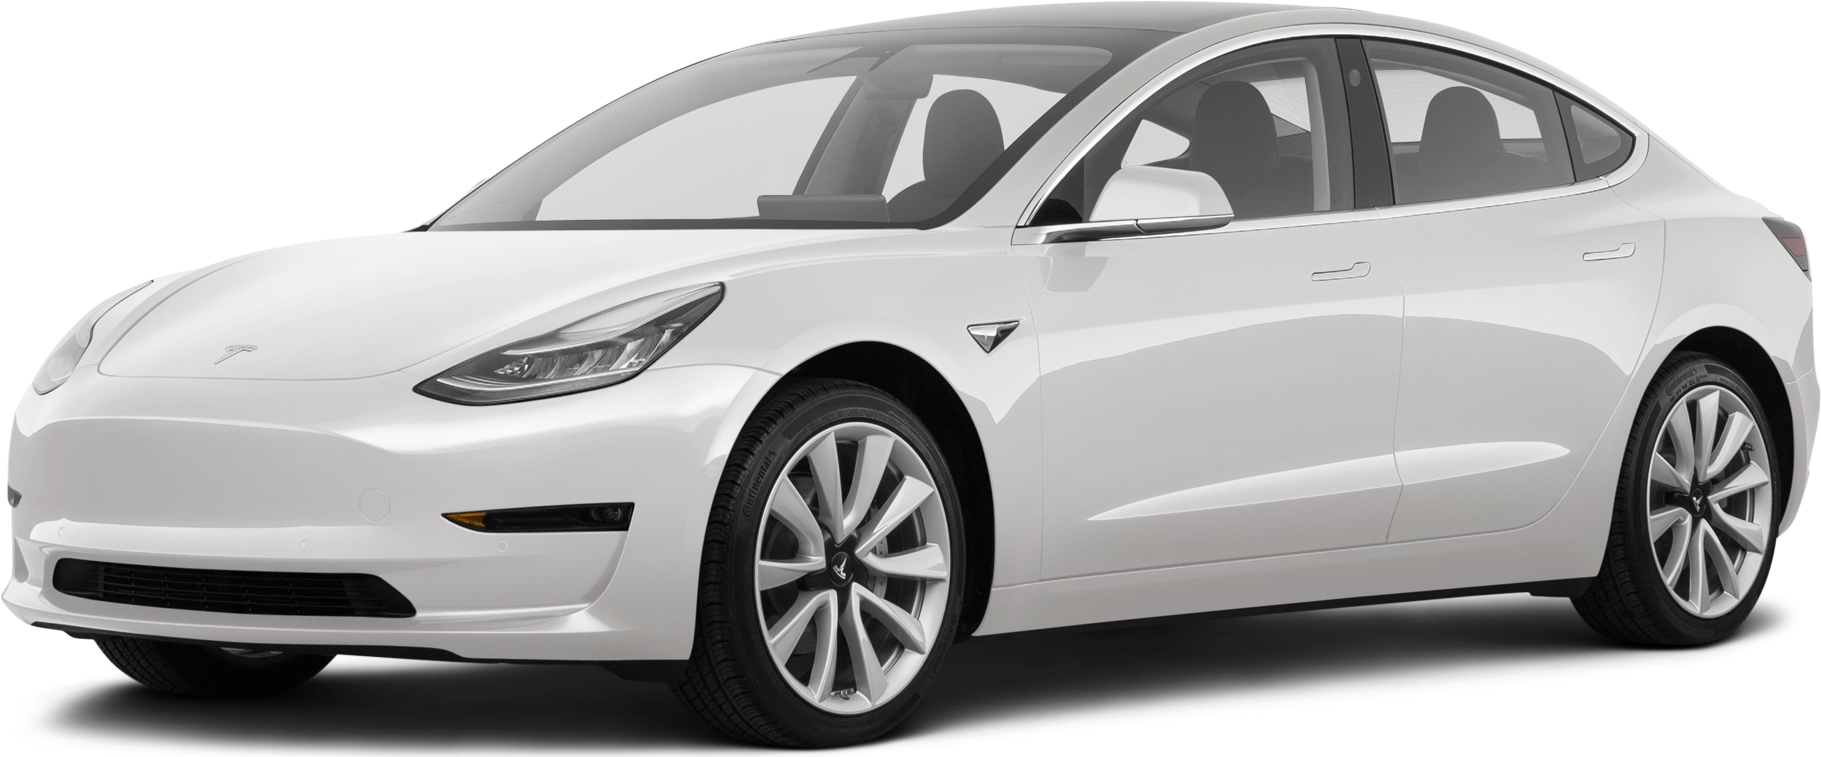 Worden pijnlijk Martin Luther King Junior 2019 Tesla Model 3 Values & Cars for Sale | Kelley Blue Book